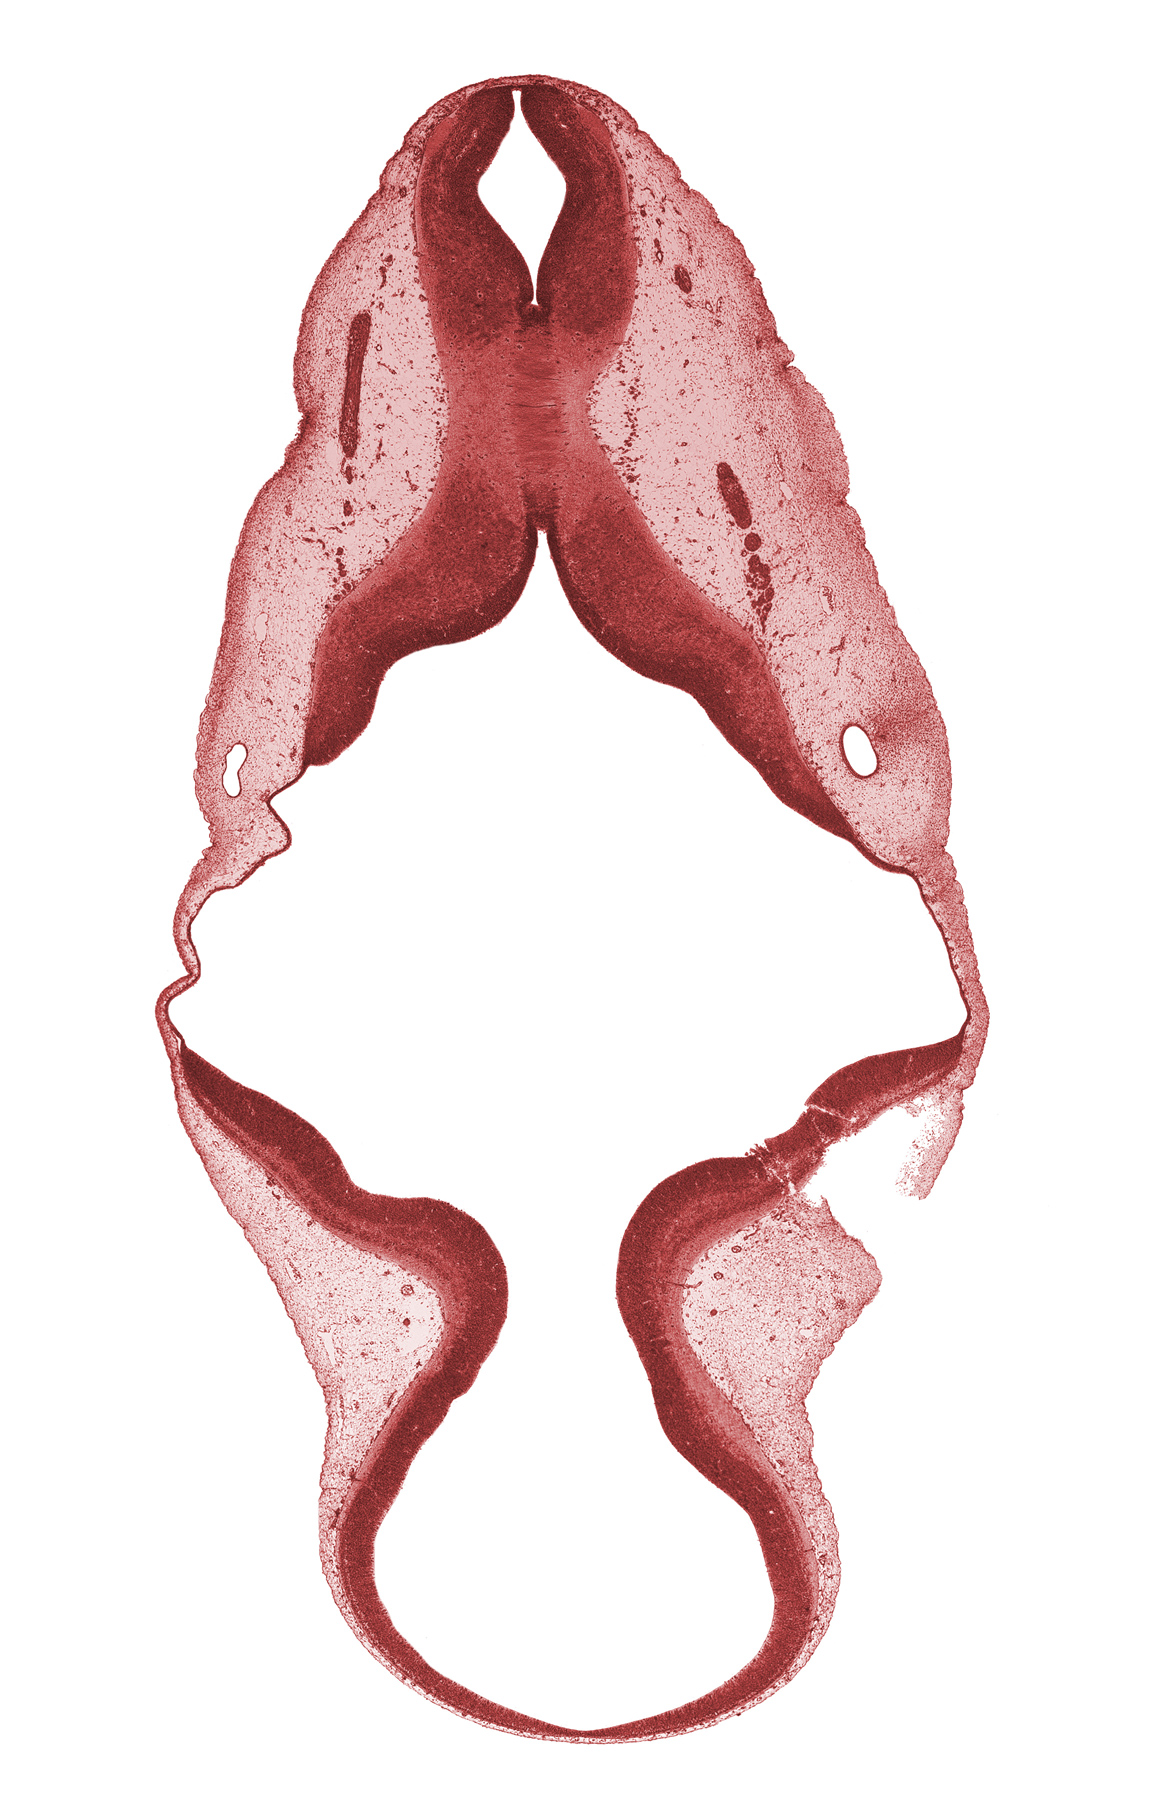 accessory nerve (CN XI), intermediate zone, marginal zone, mesencephalon (M2), missing tissue (artifact), otic capsule condensation, roof plate, root of vagus nerve (CN X), tectum, tegmentum, trochlear nerve (CN IV), ventricular zone